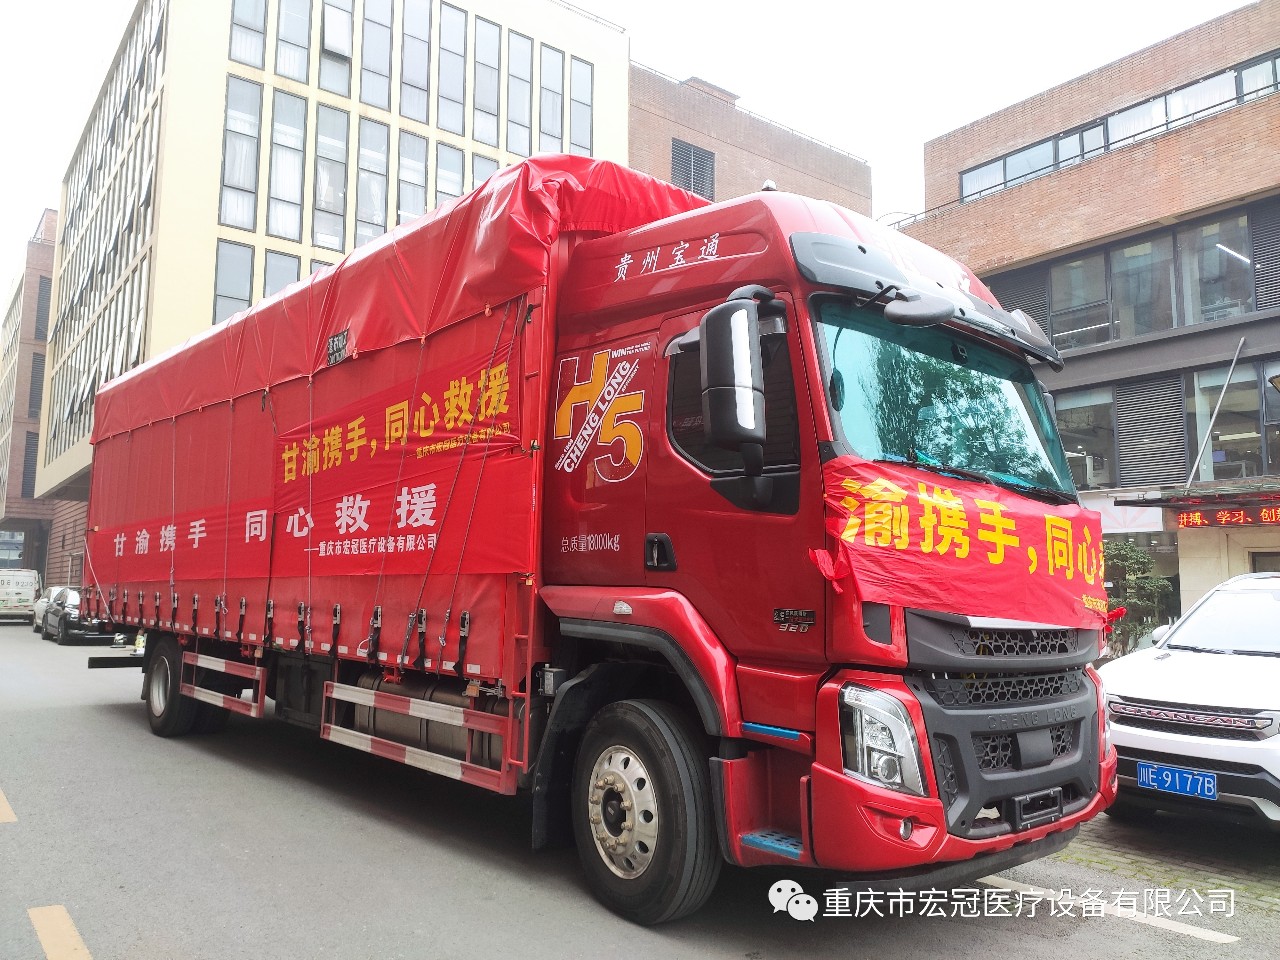 Chongqing Hongguan Medical Equipment Co., Ltd. 700,000 யுவான்களுக்கும் அதிகமான மருத்துவப் பொருட்களை கன்சுவில் உள்ள பேரிடர் பகுதிகளுக்கு ஆதரவாக வழங்கியது.